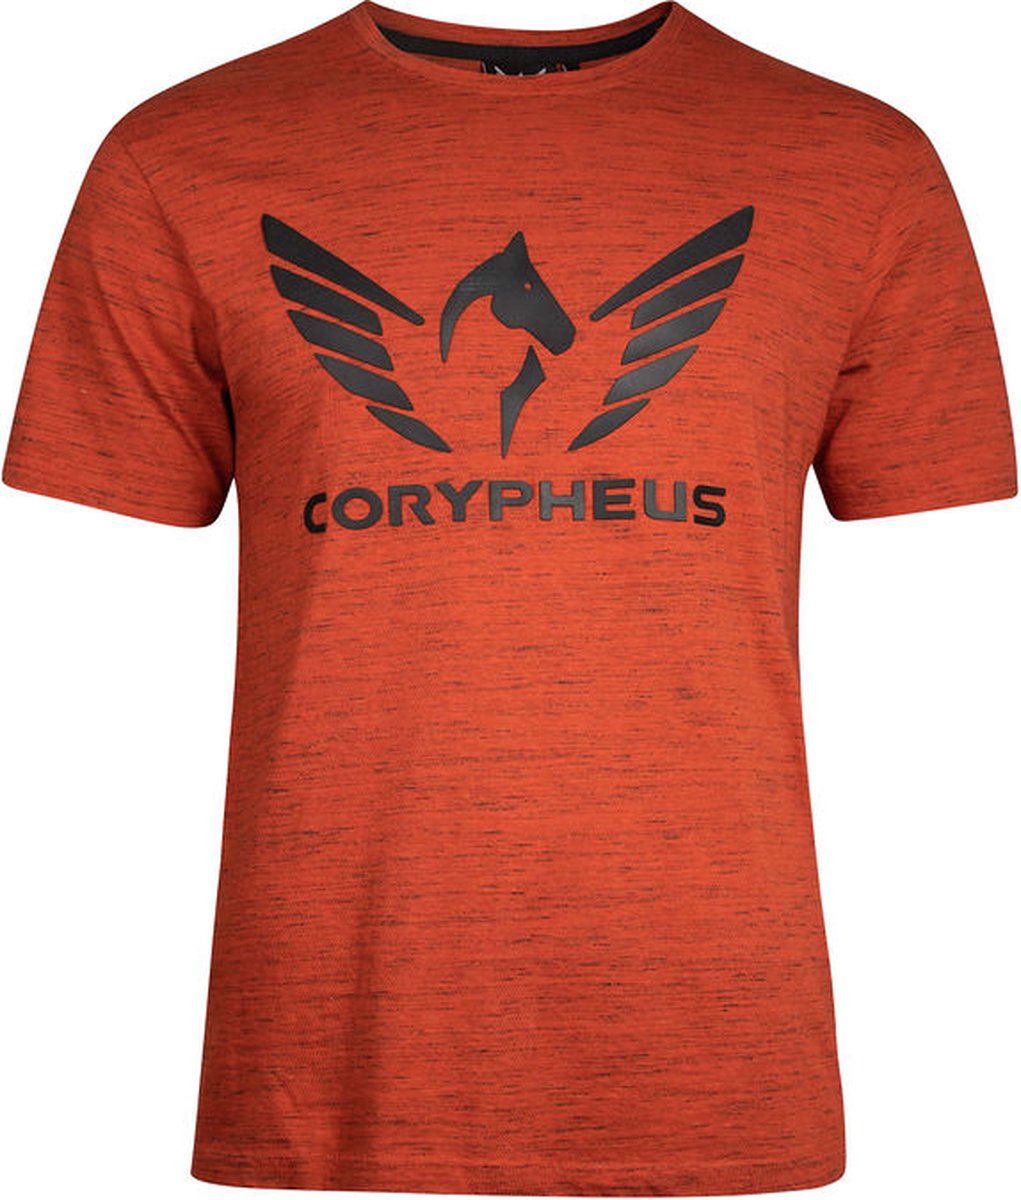 Corypheus Burnt Henna Men's T-Shirt - Medium